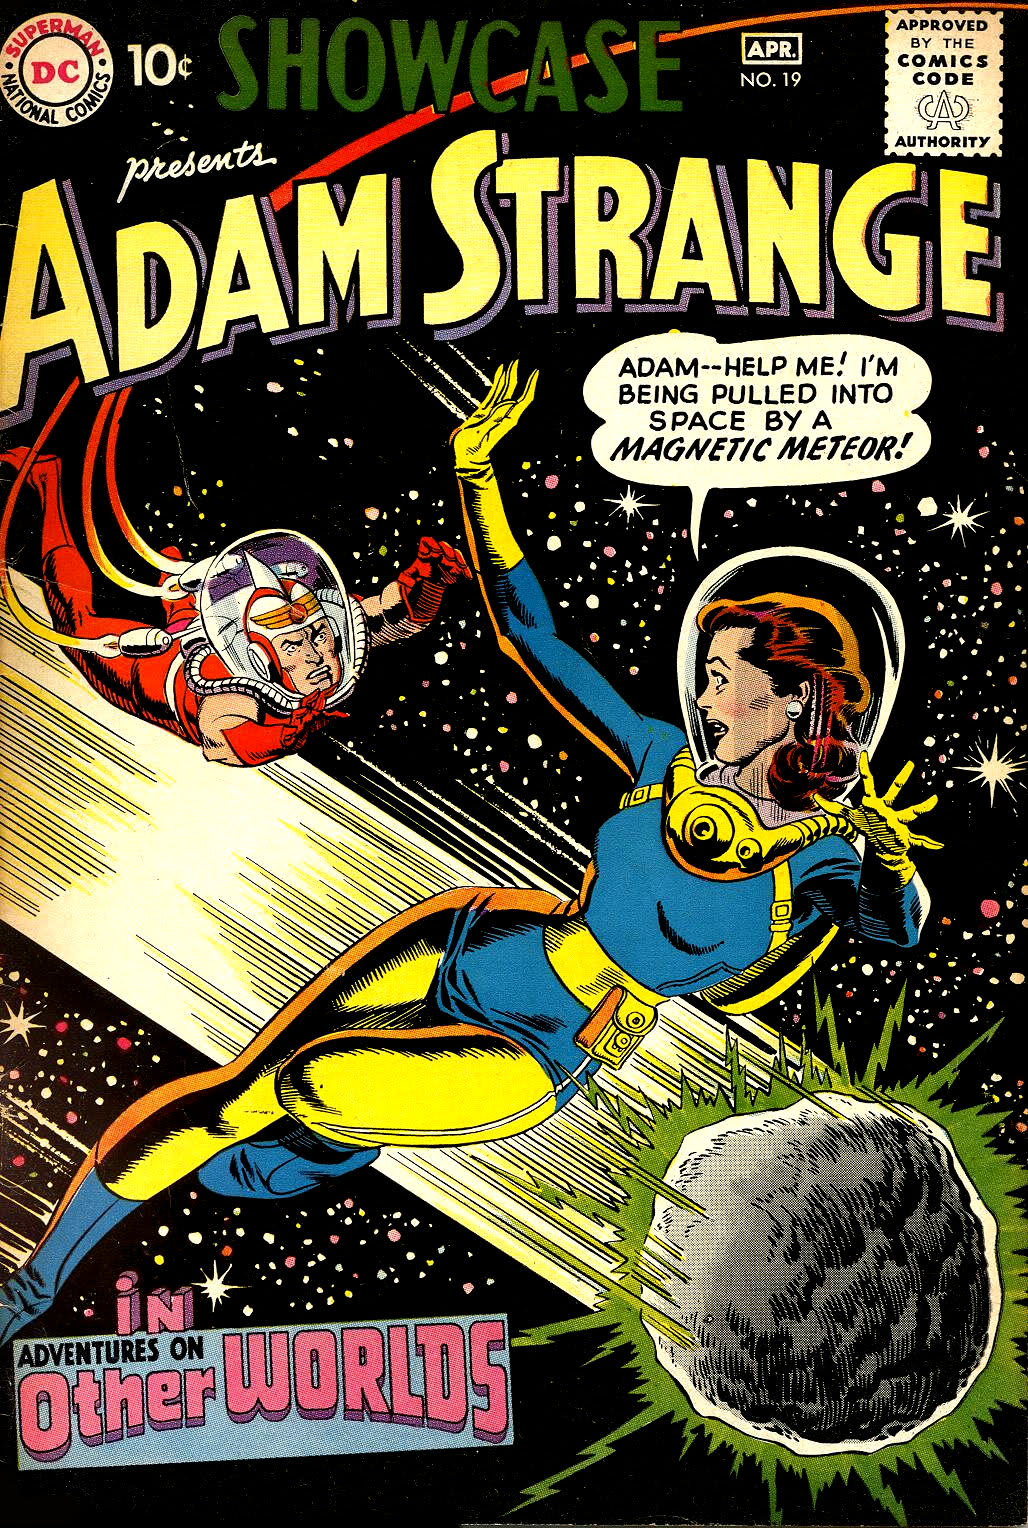 Amazing Adam Strange Pictures & Backgrounds